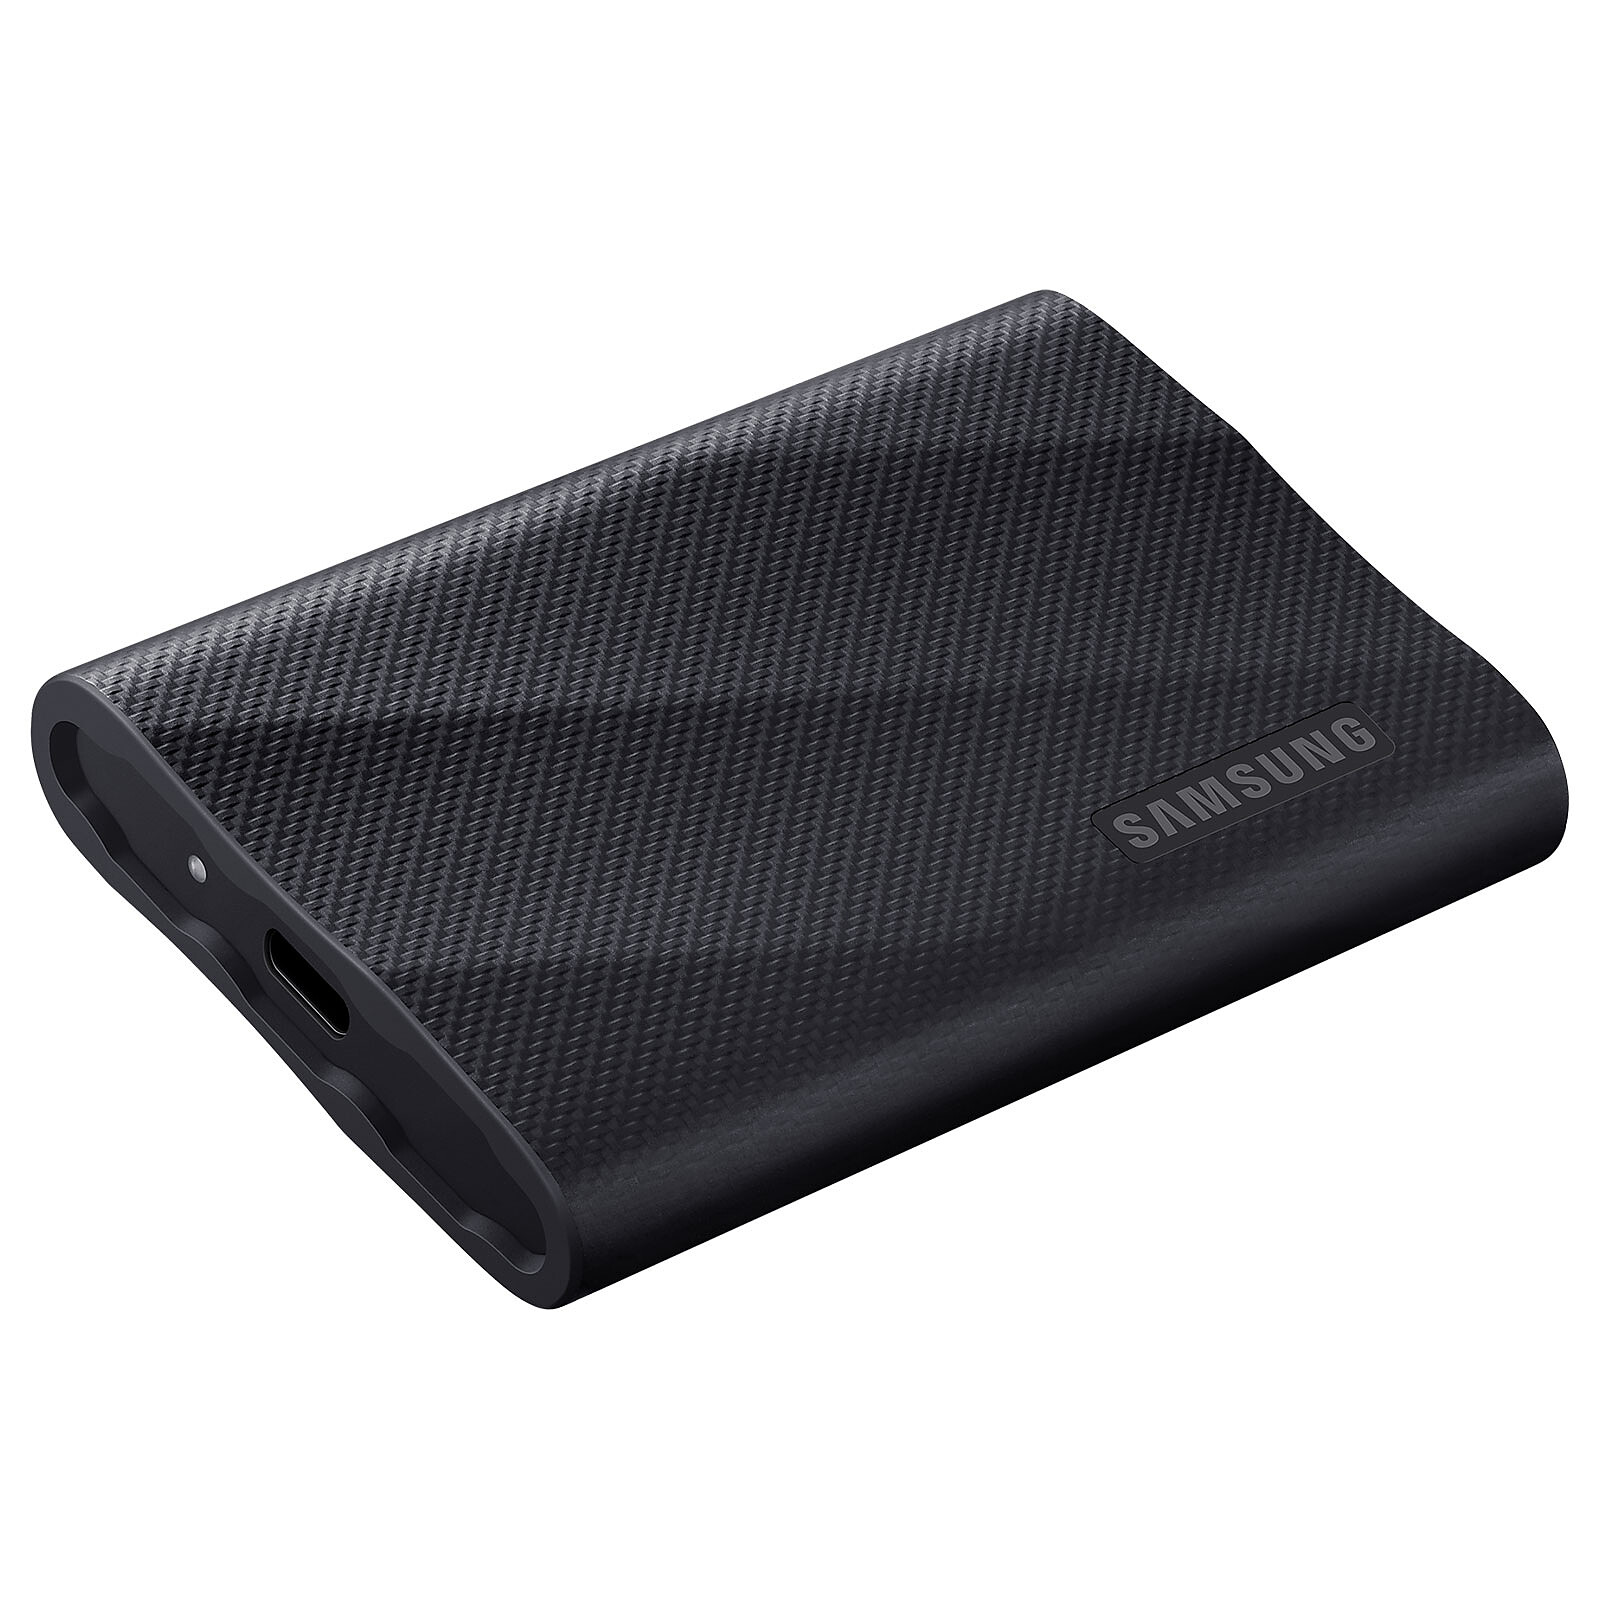 SSD esterno Samsung T9 1TB - Hard disk esterno - Garanzia 3 anni LDLC